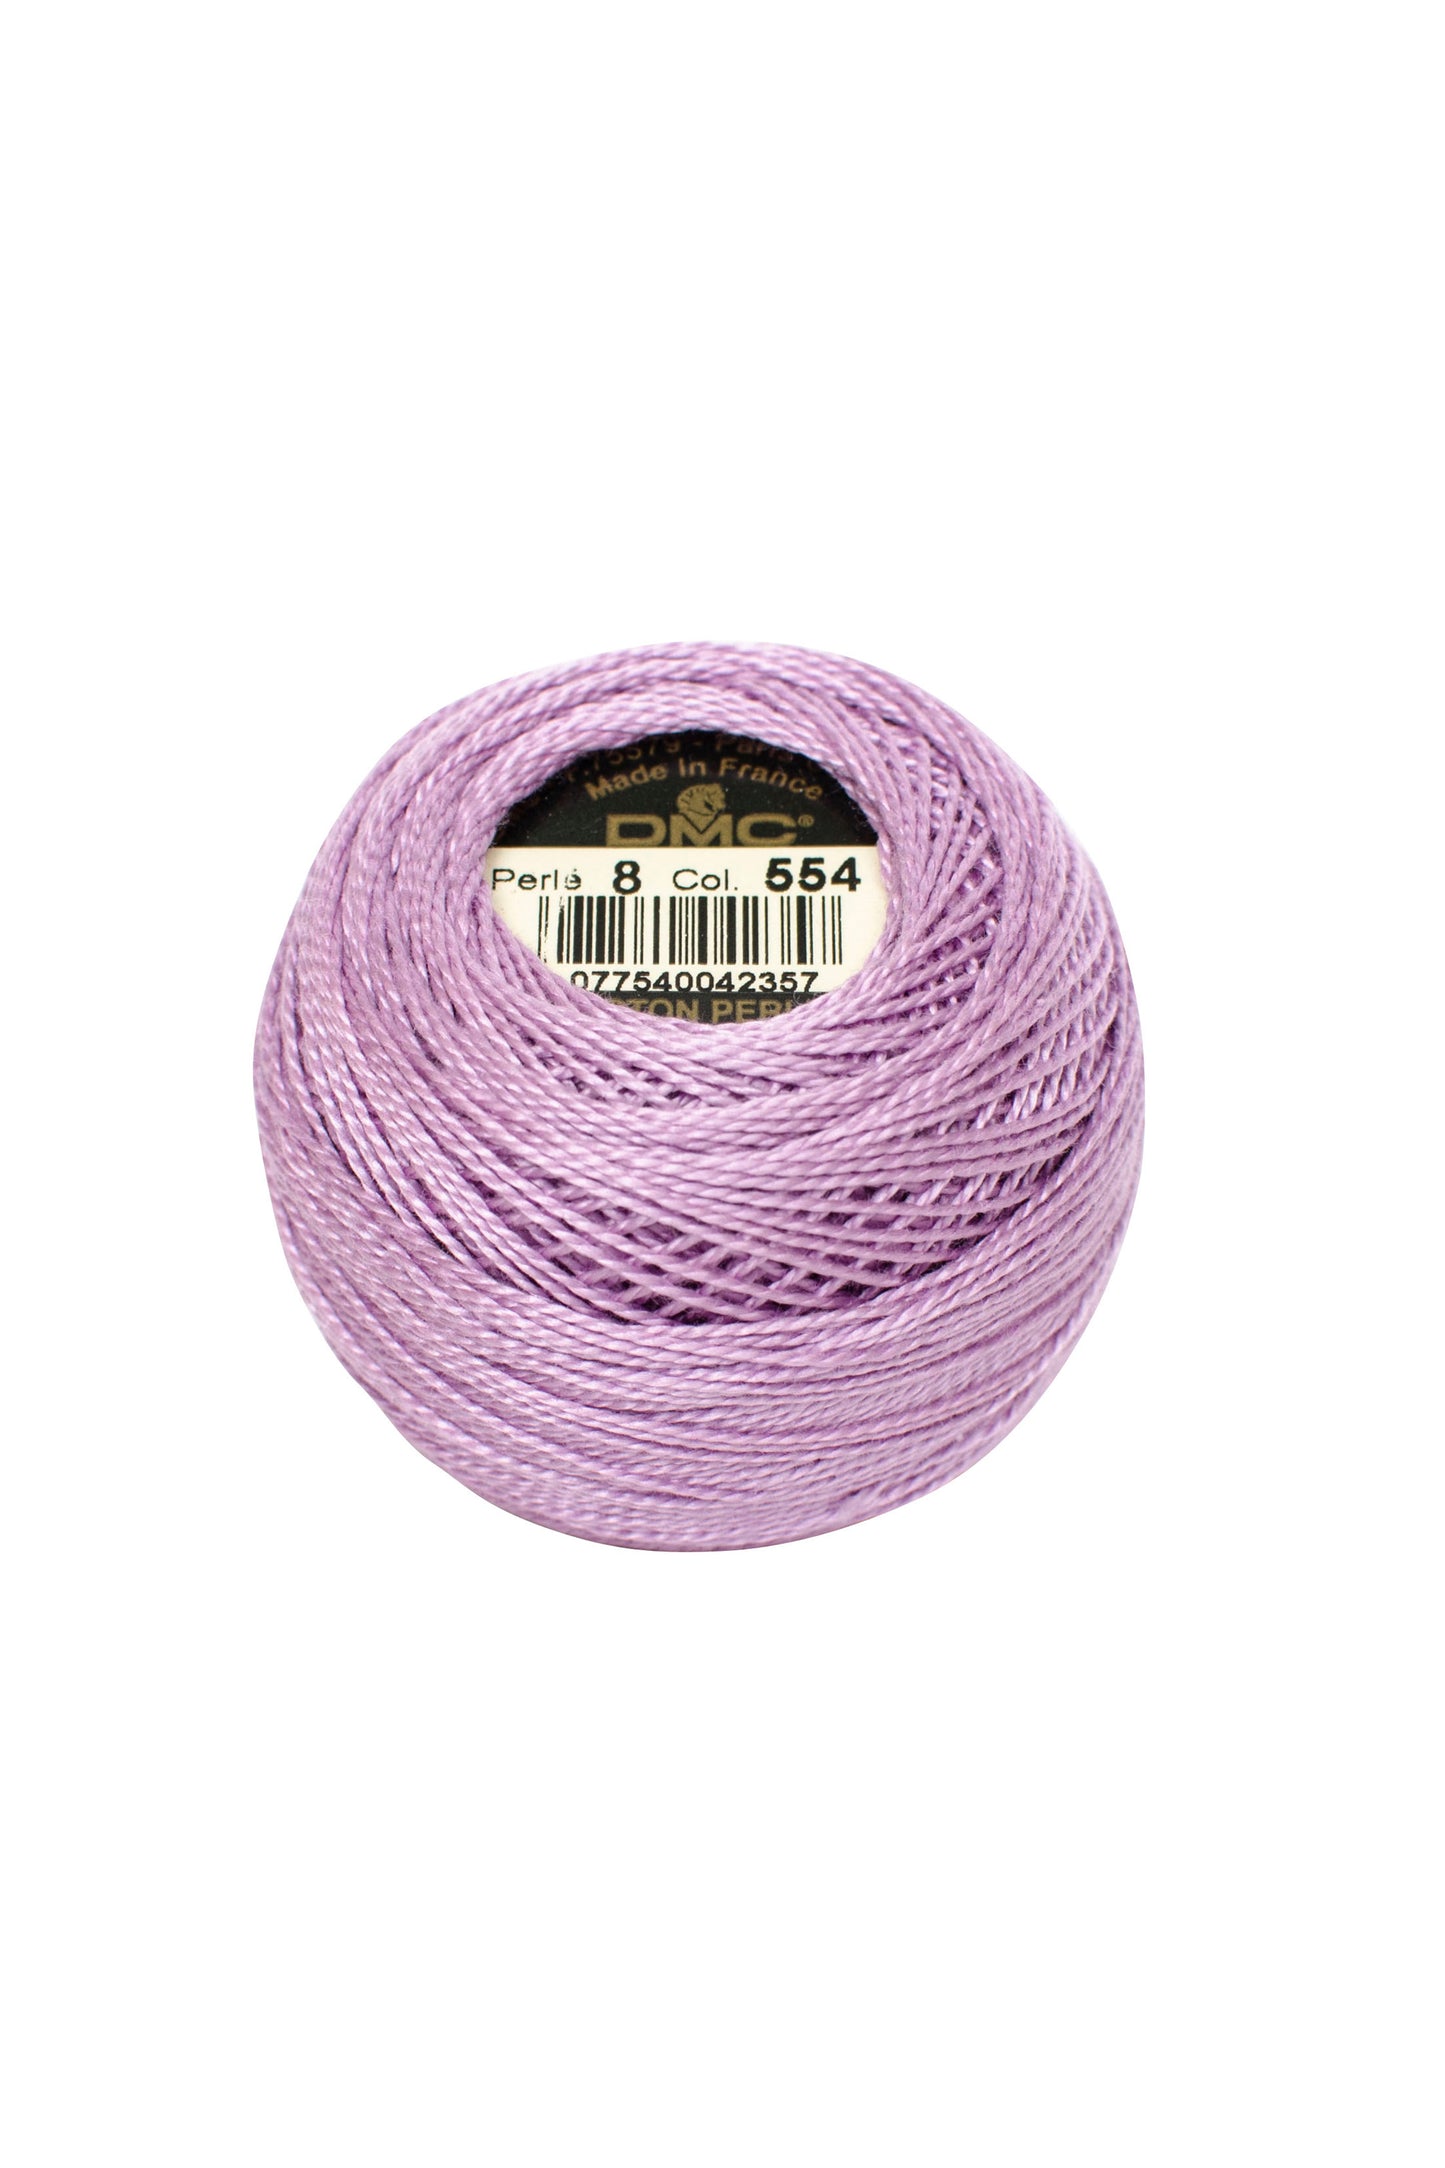 554 Very Light Violet – DMC #5 Perle Cotton Ball